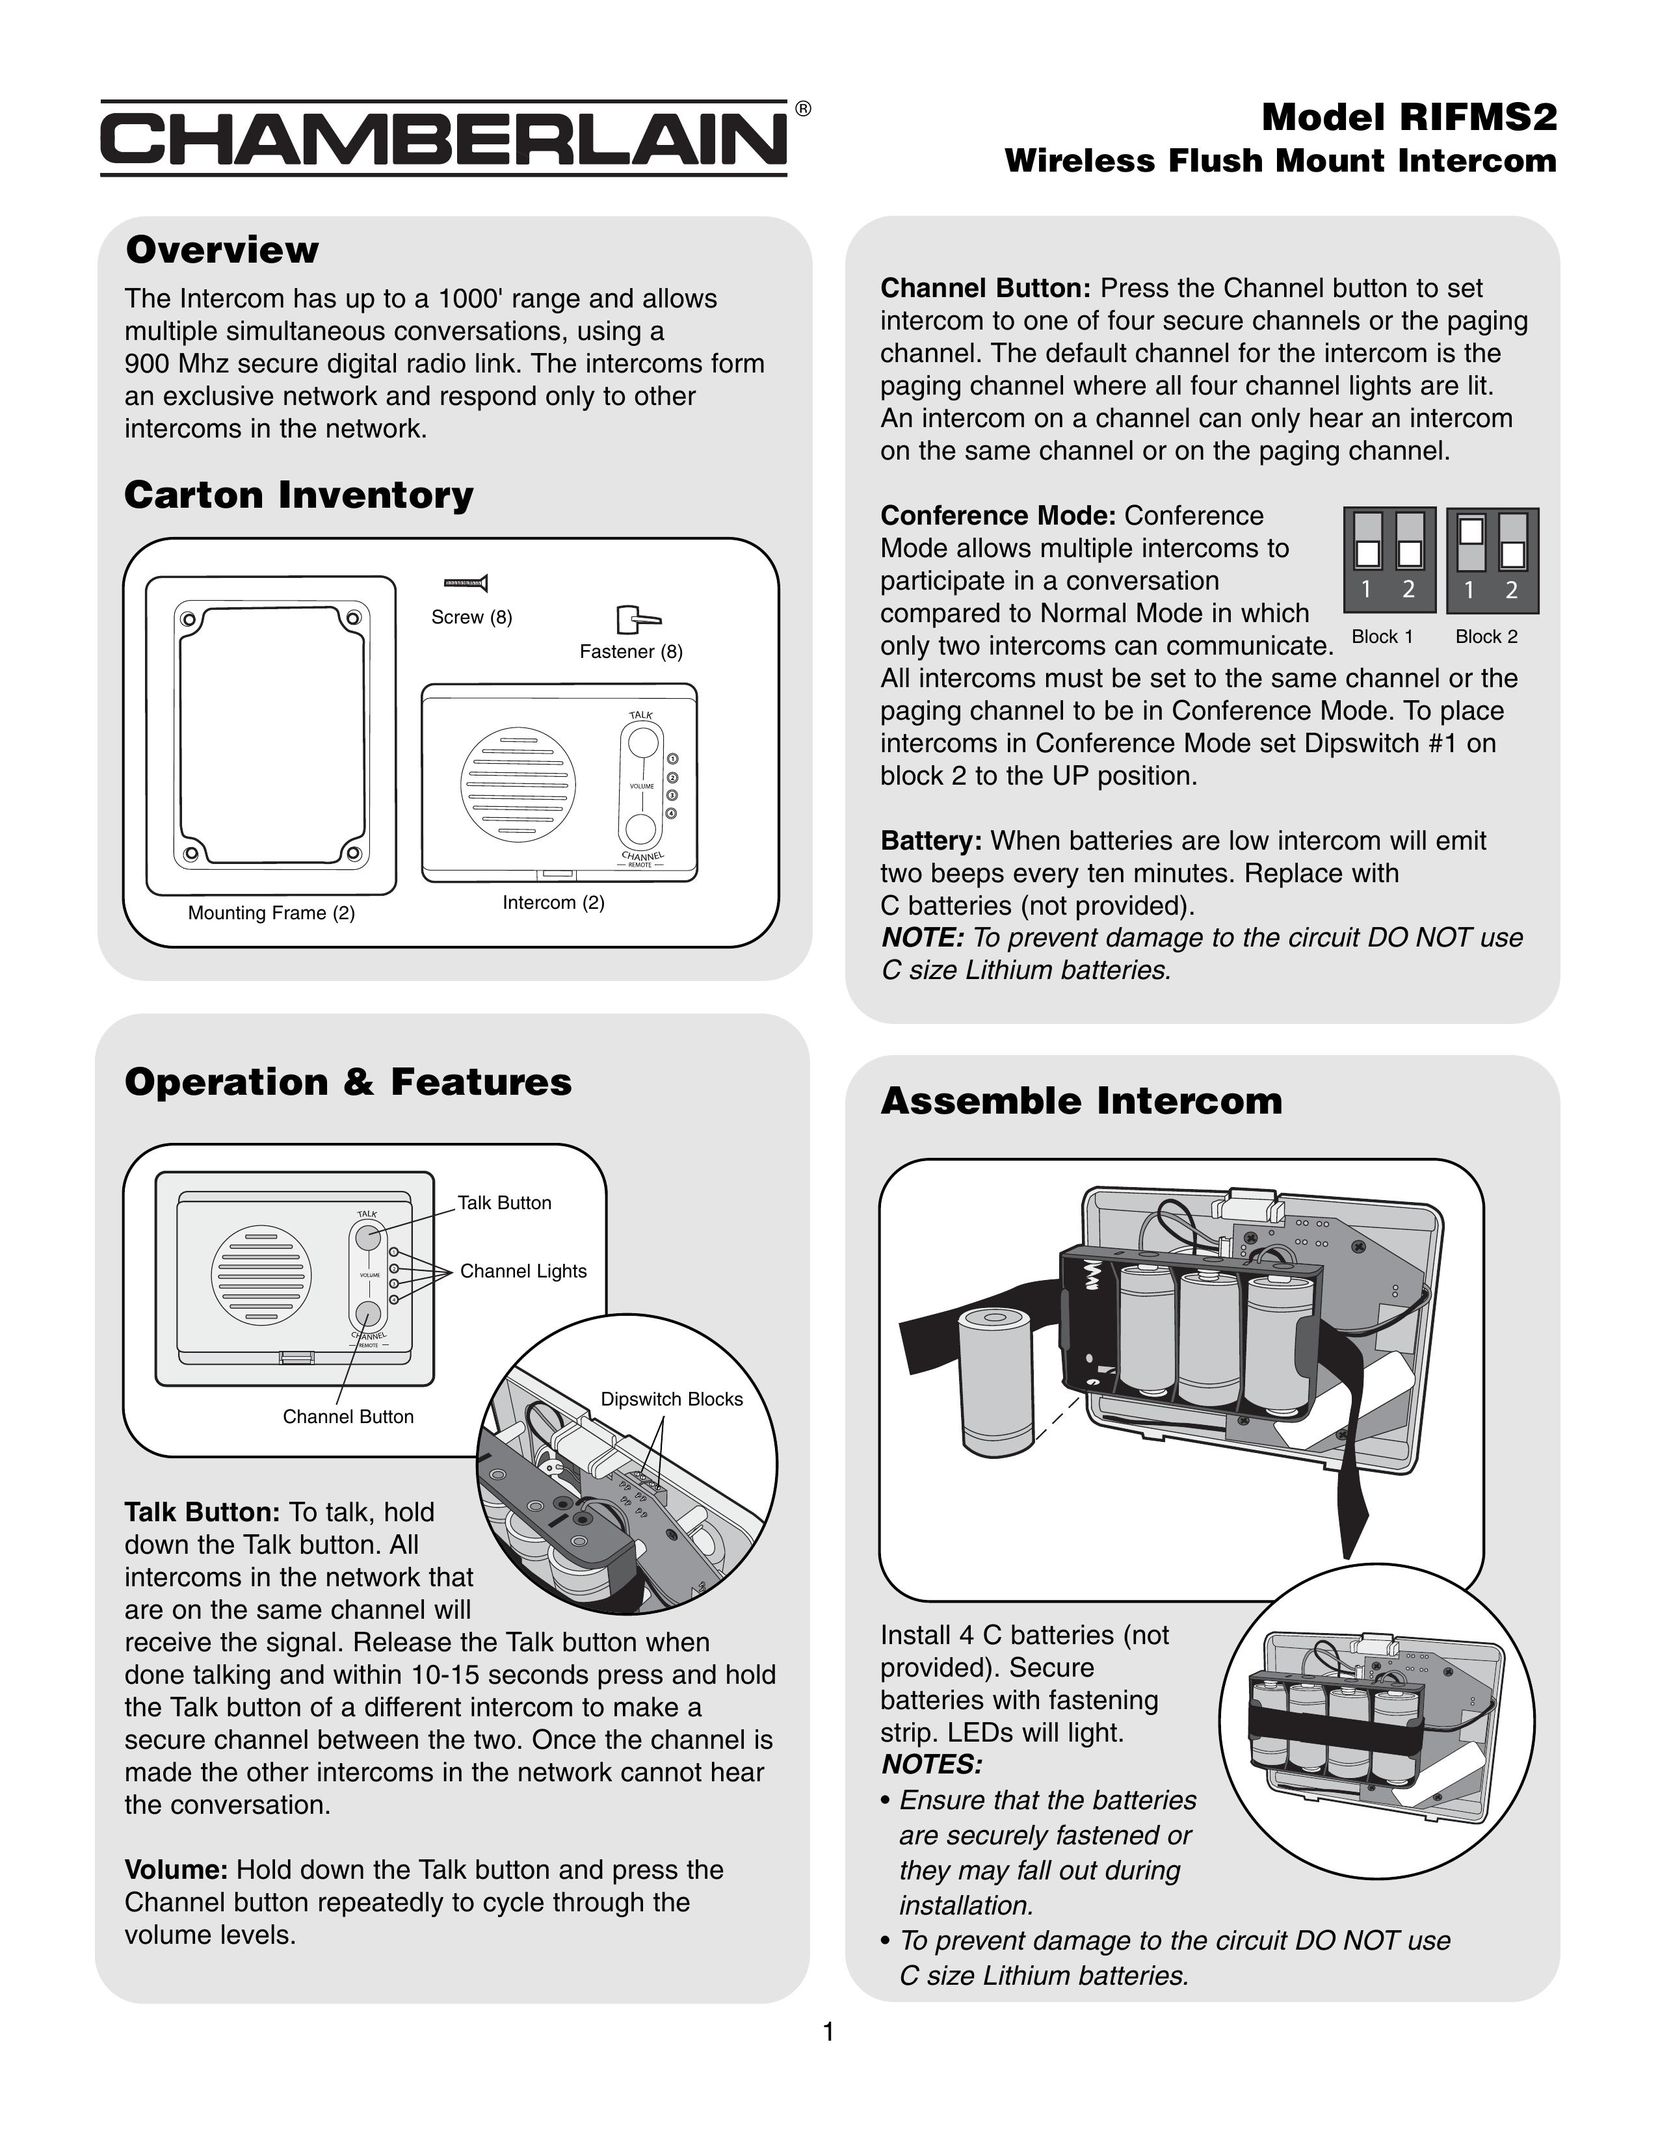 Chamberlain RIFMS2 Intercom System User Manual